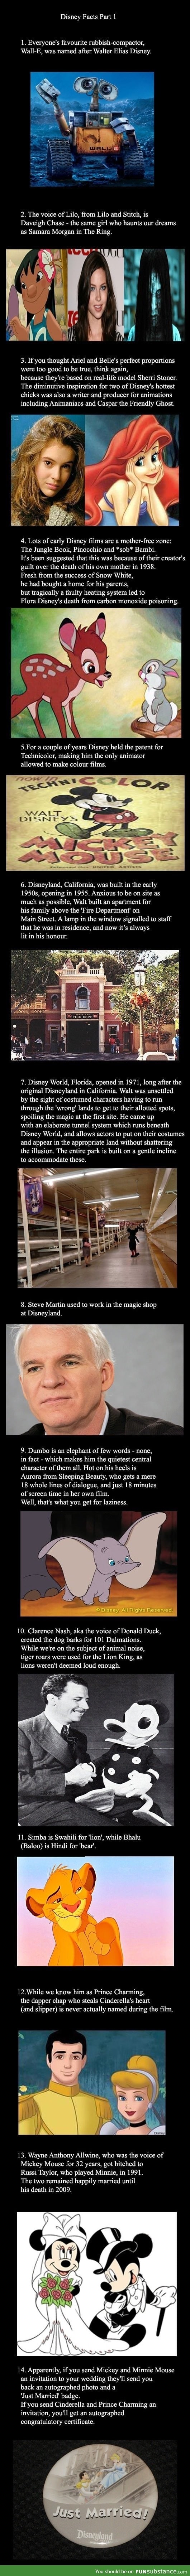 Disney fact comp